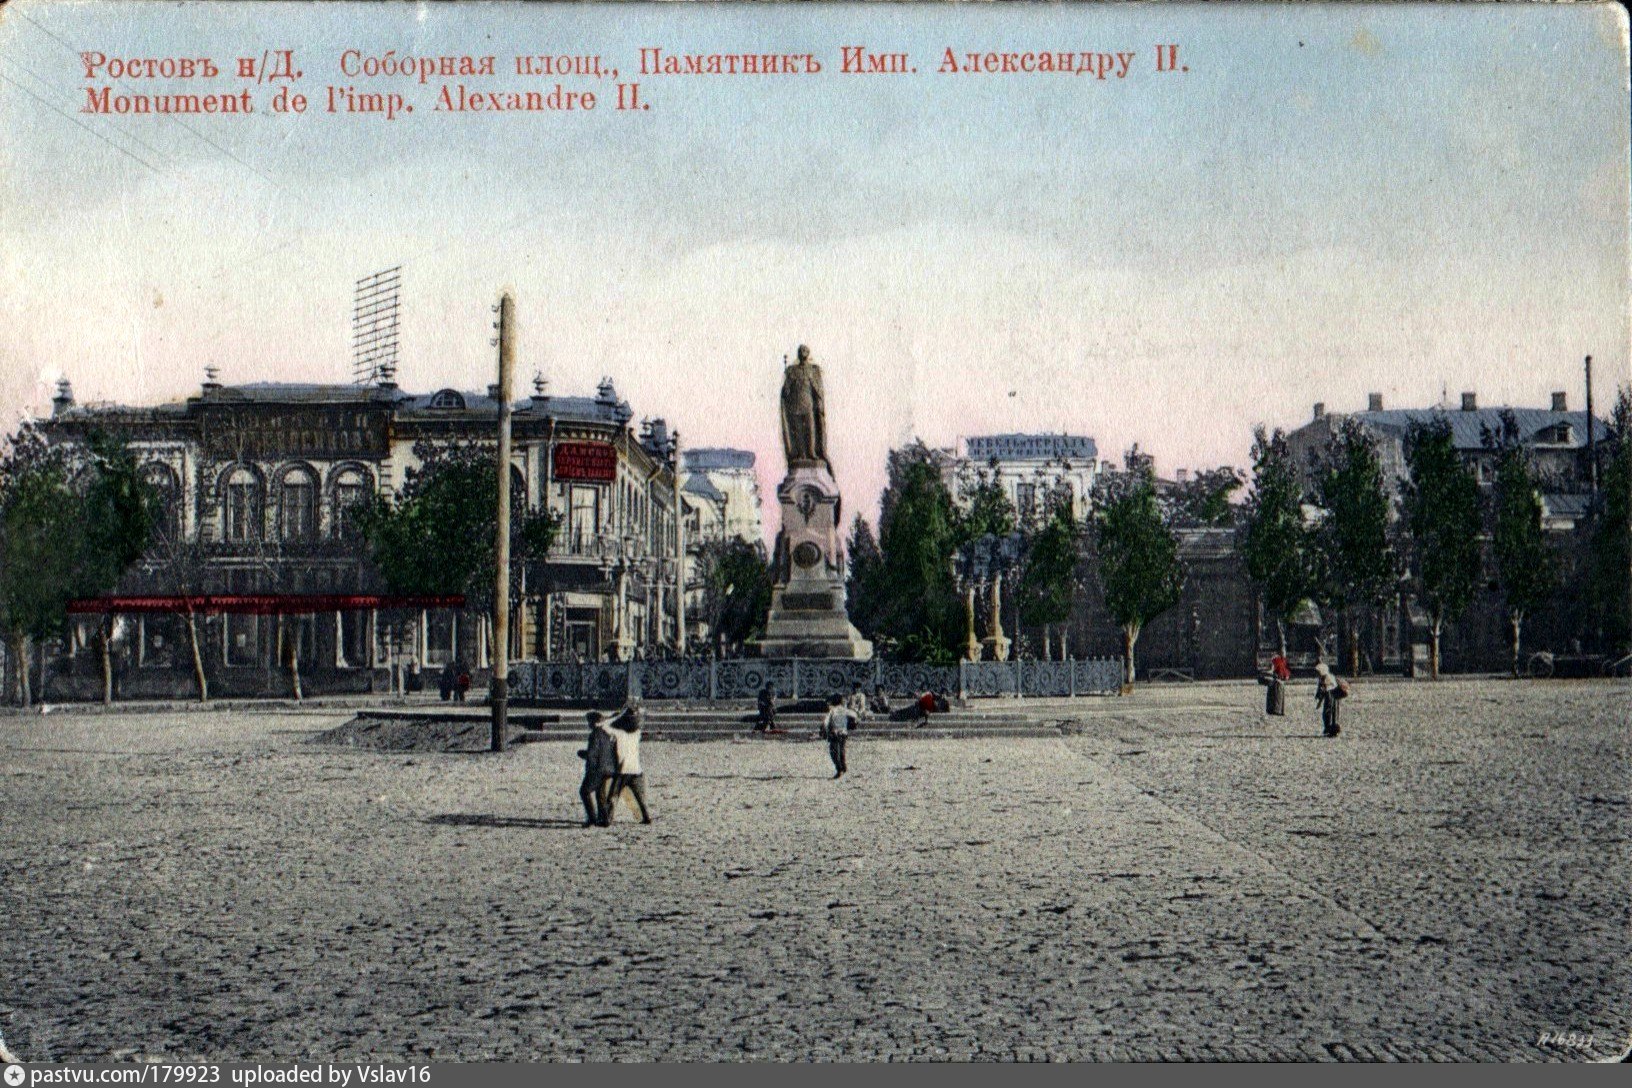 Памятник Александру II В Ростове-на-Дону (1890)